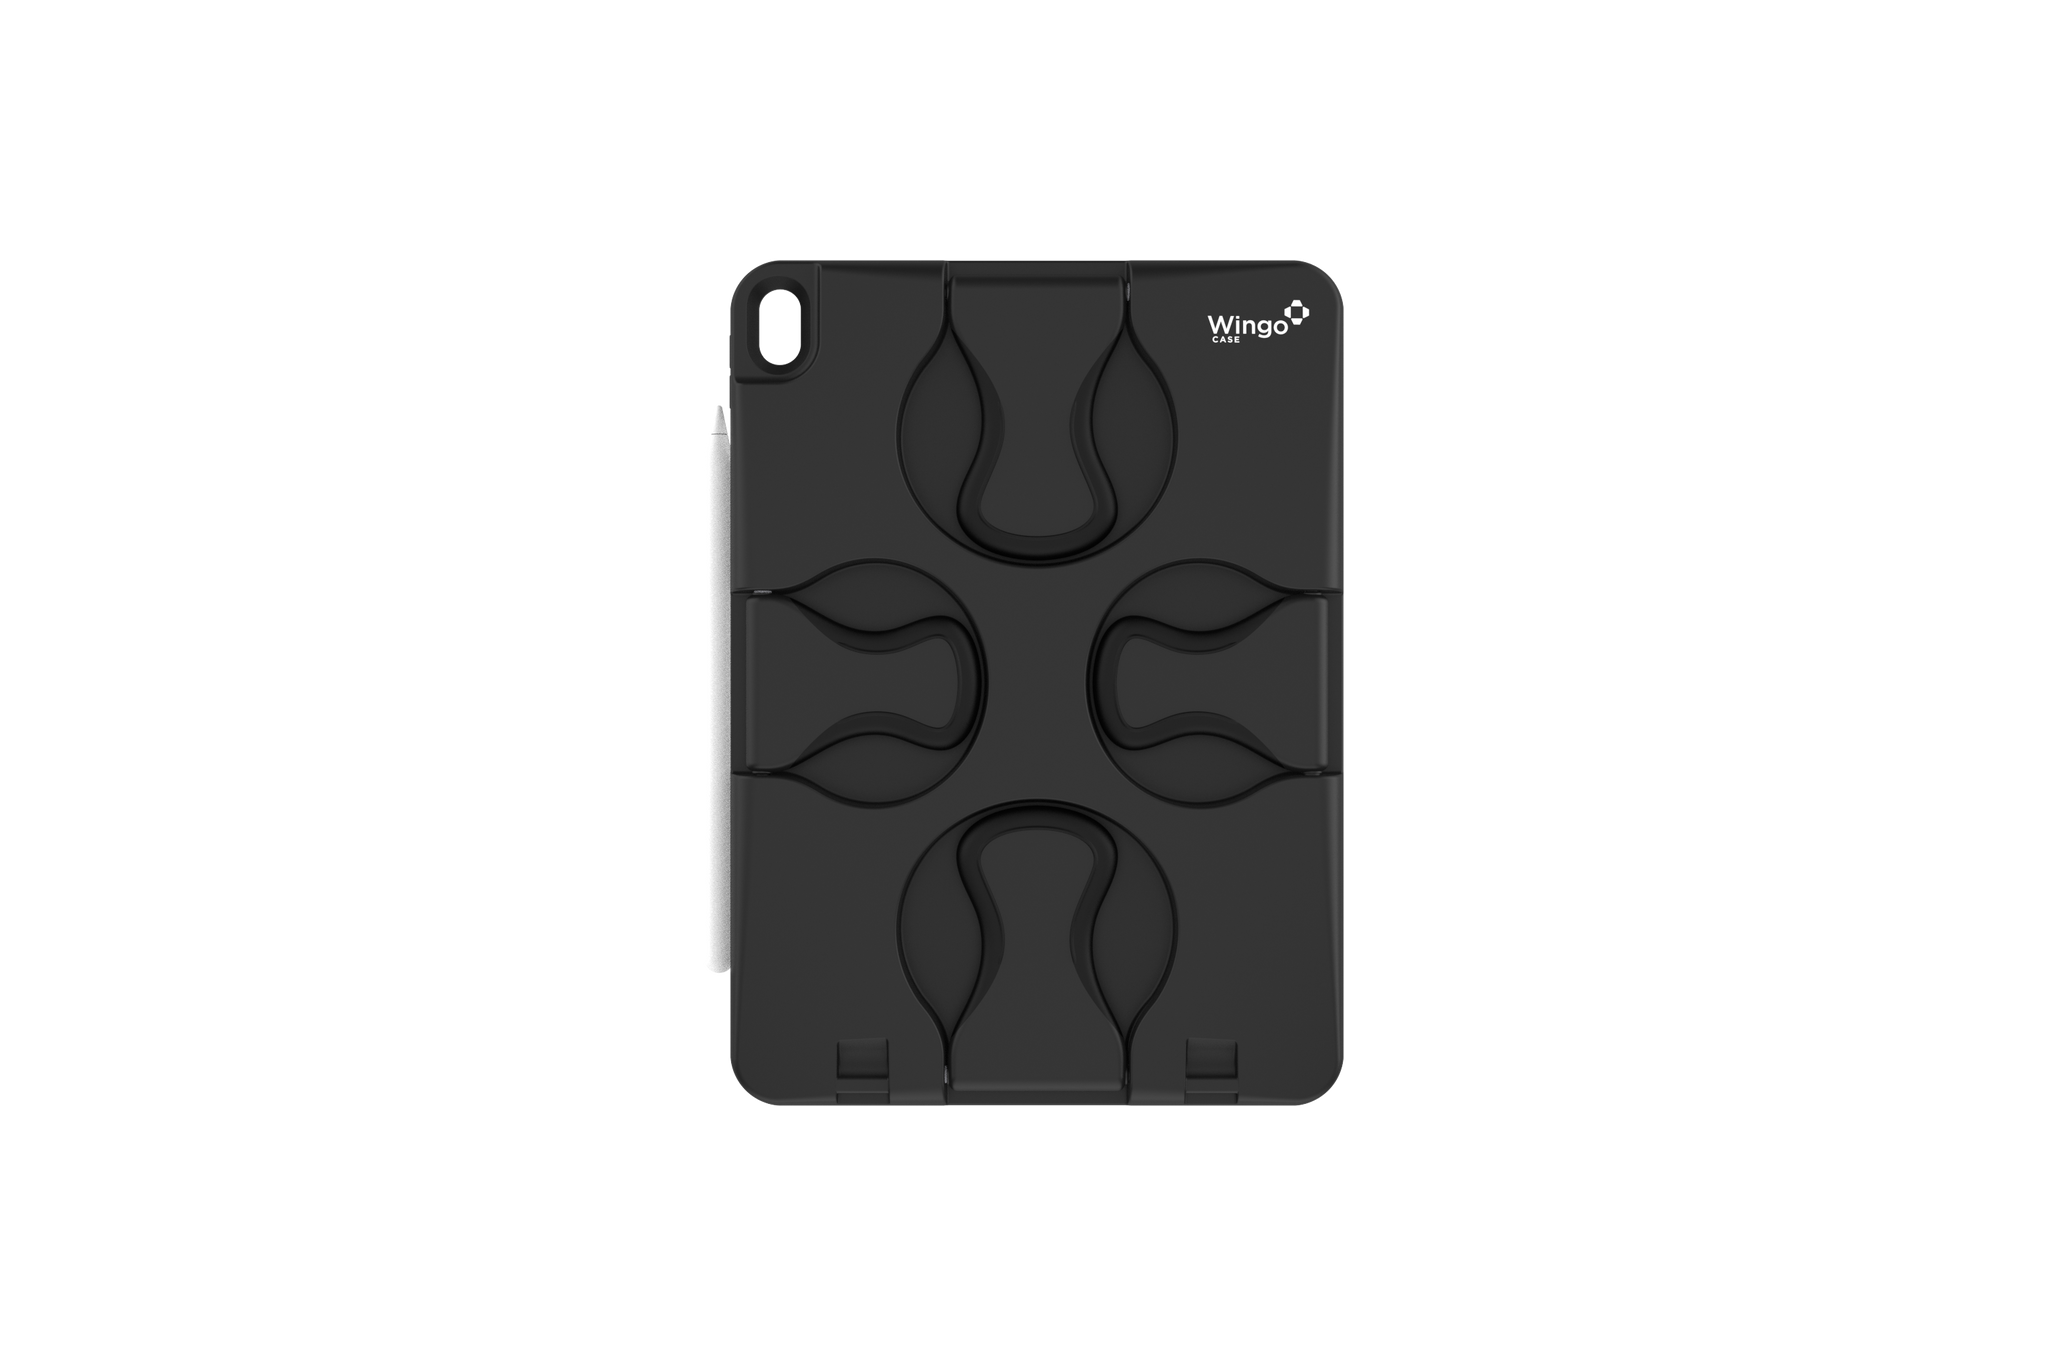 WingoCase for iPad Air (5th - 4th gen)